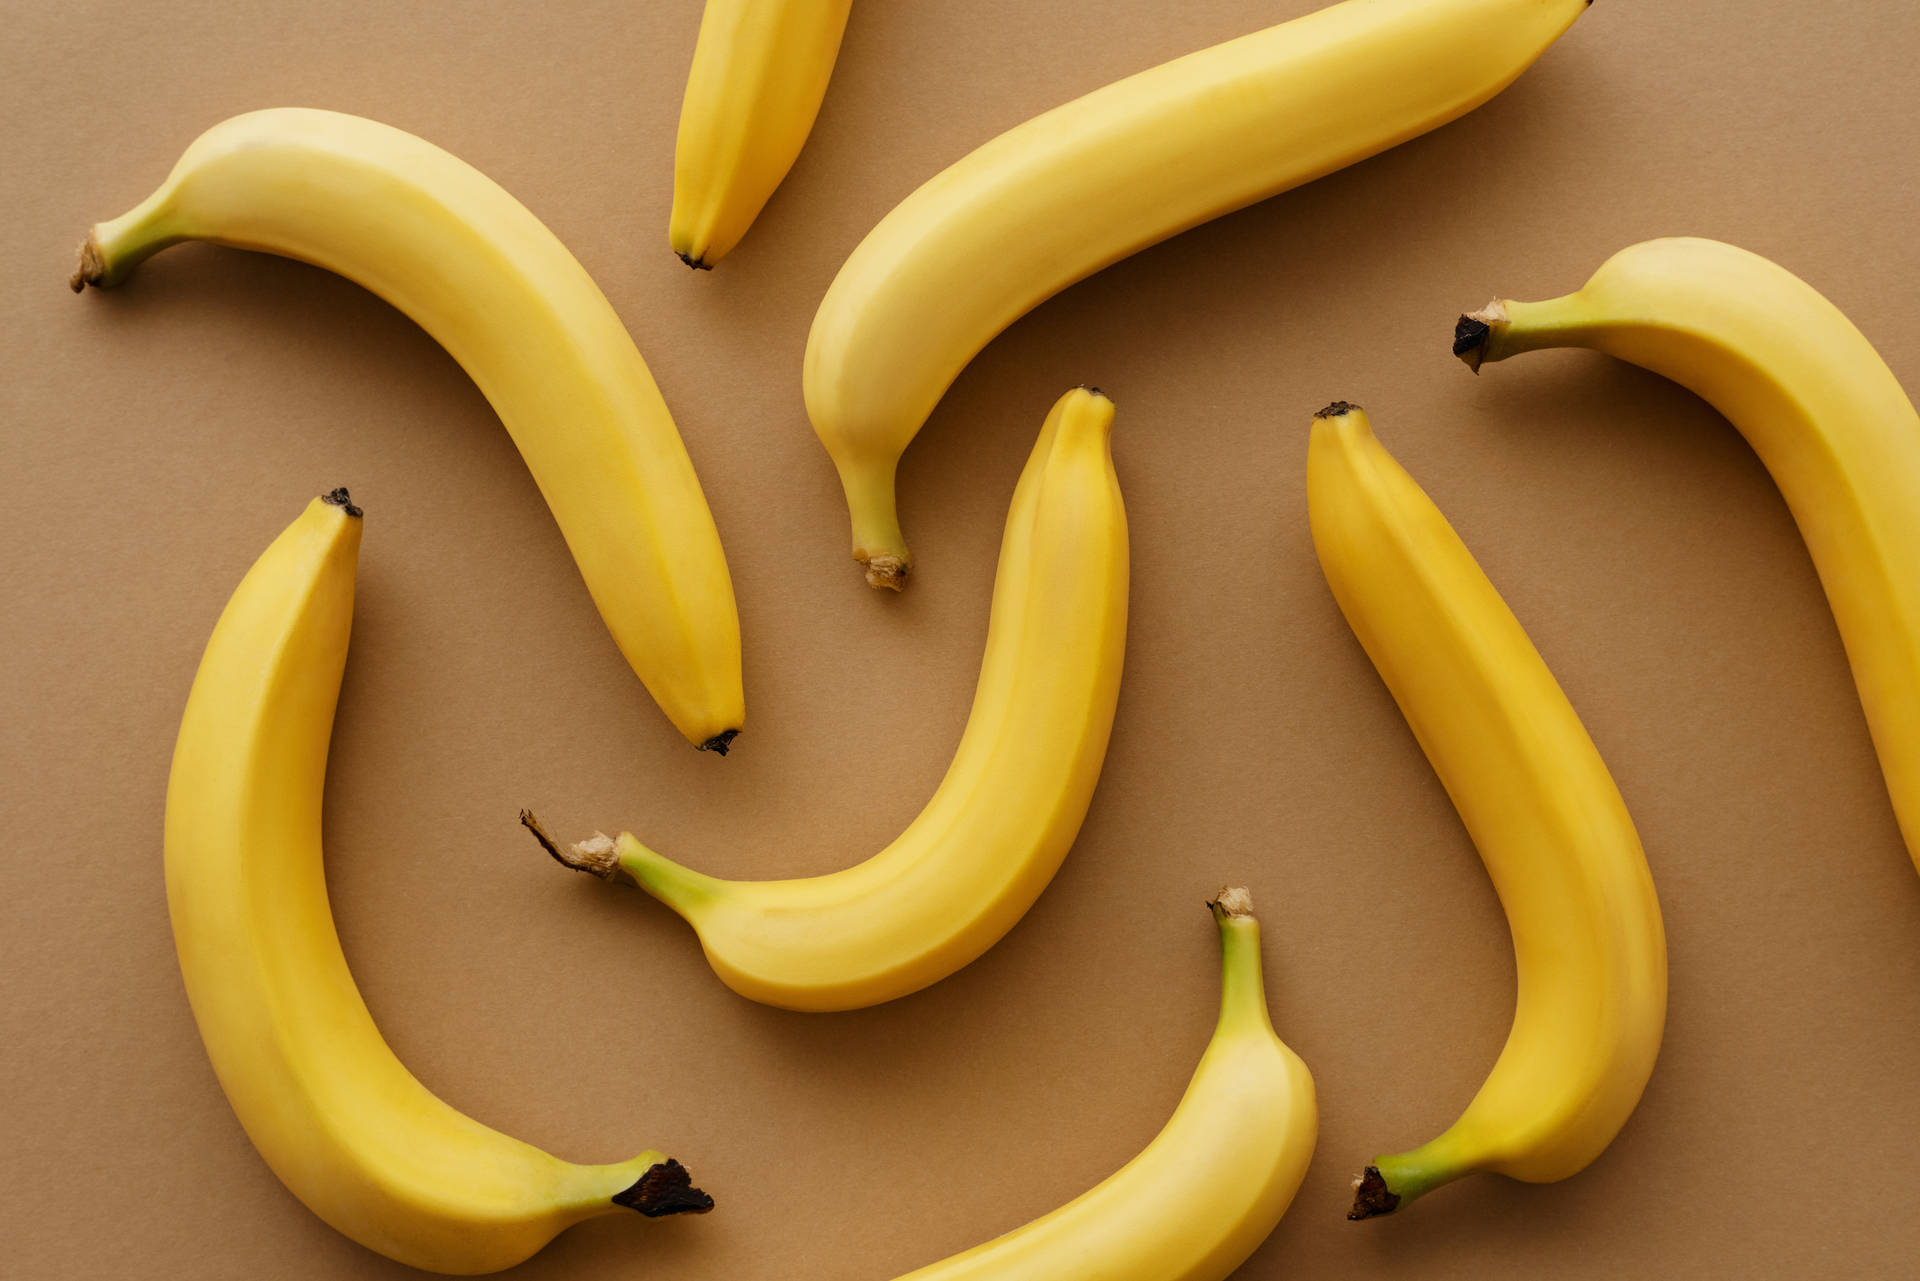 Free Banana Wallpaper Downloads, [100+] Banana Wallpapers for FREE |  